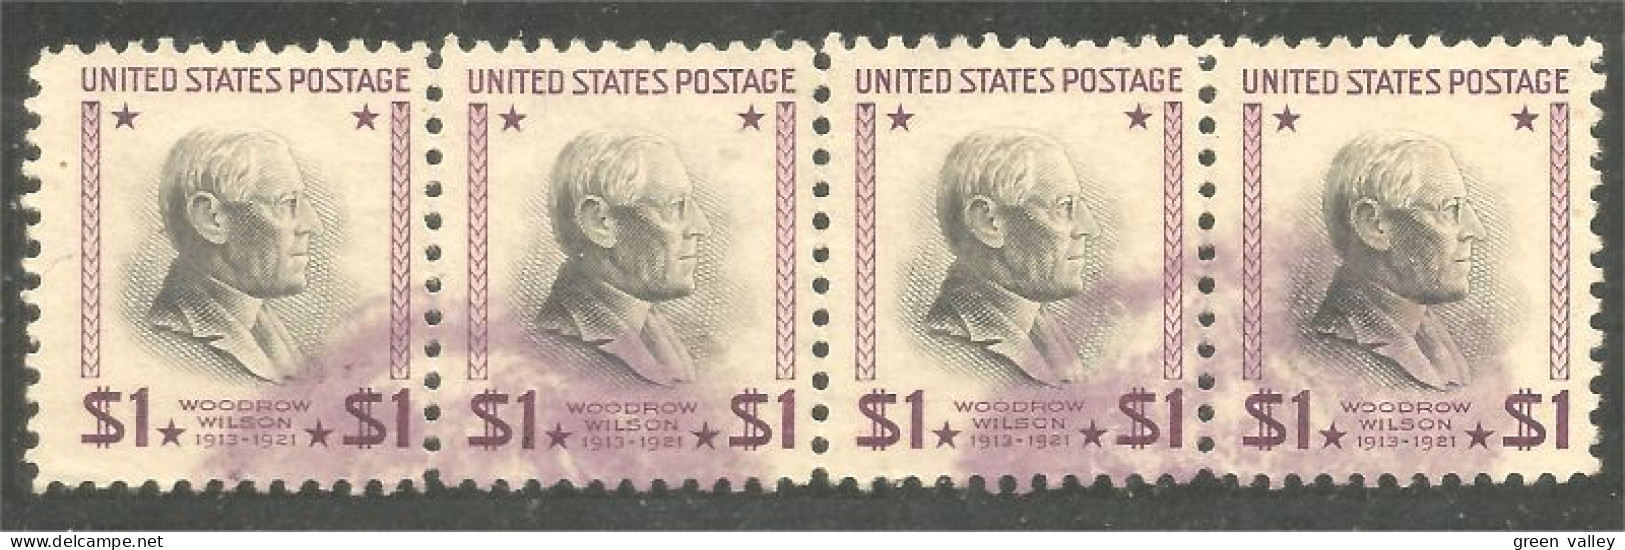 912 USA $1 Woodrow Wilson Dollar Strip Of 4 Stamps (USA-468) - Oblitérés